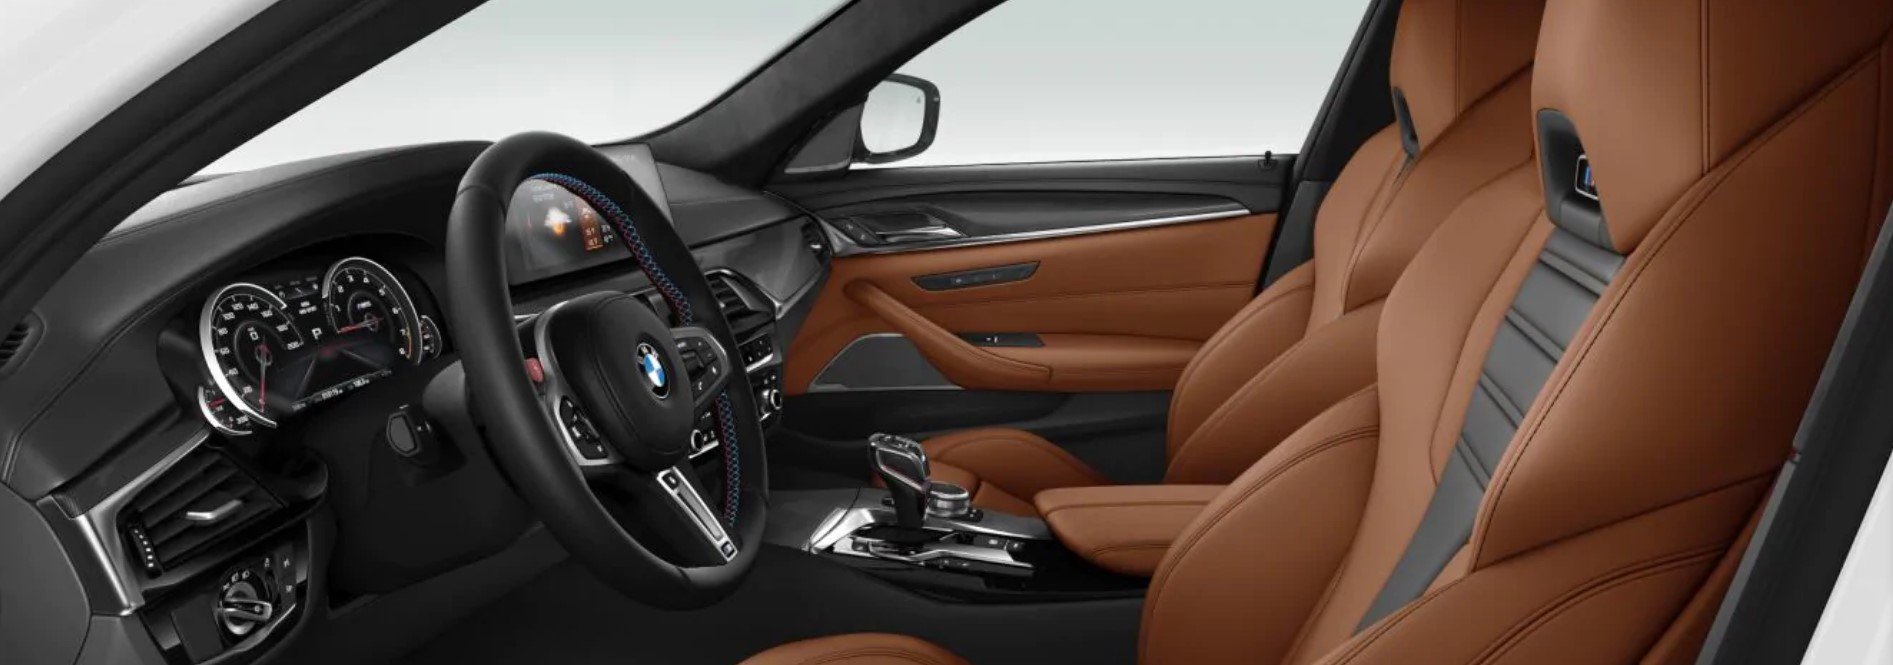 Lease a 2019 BMW M5 Sedan | Sterling BMW | Best Rated BMW Dealer in OC